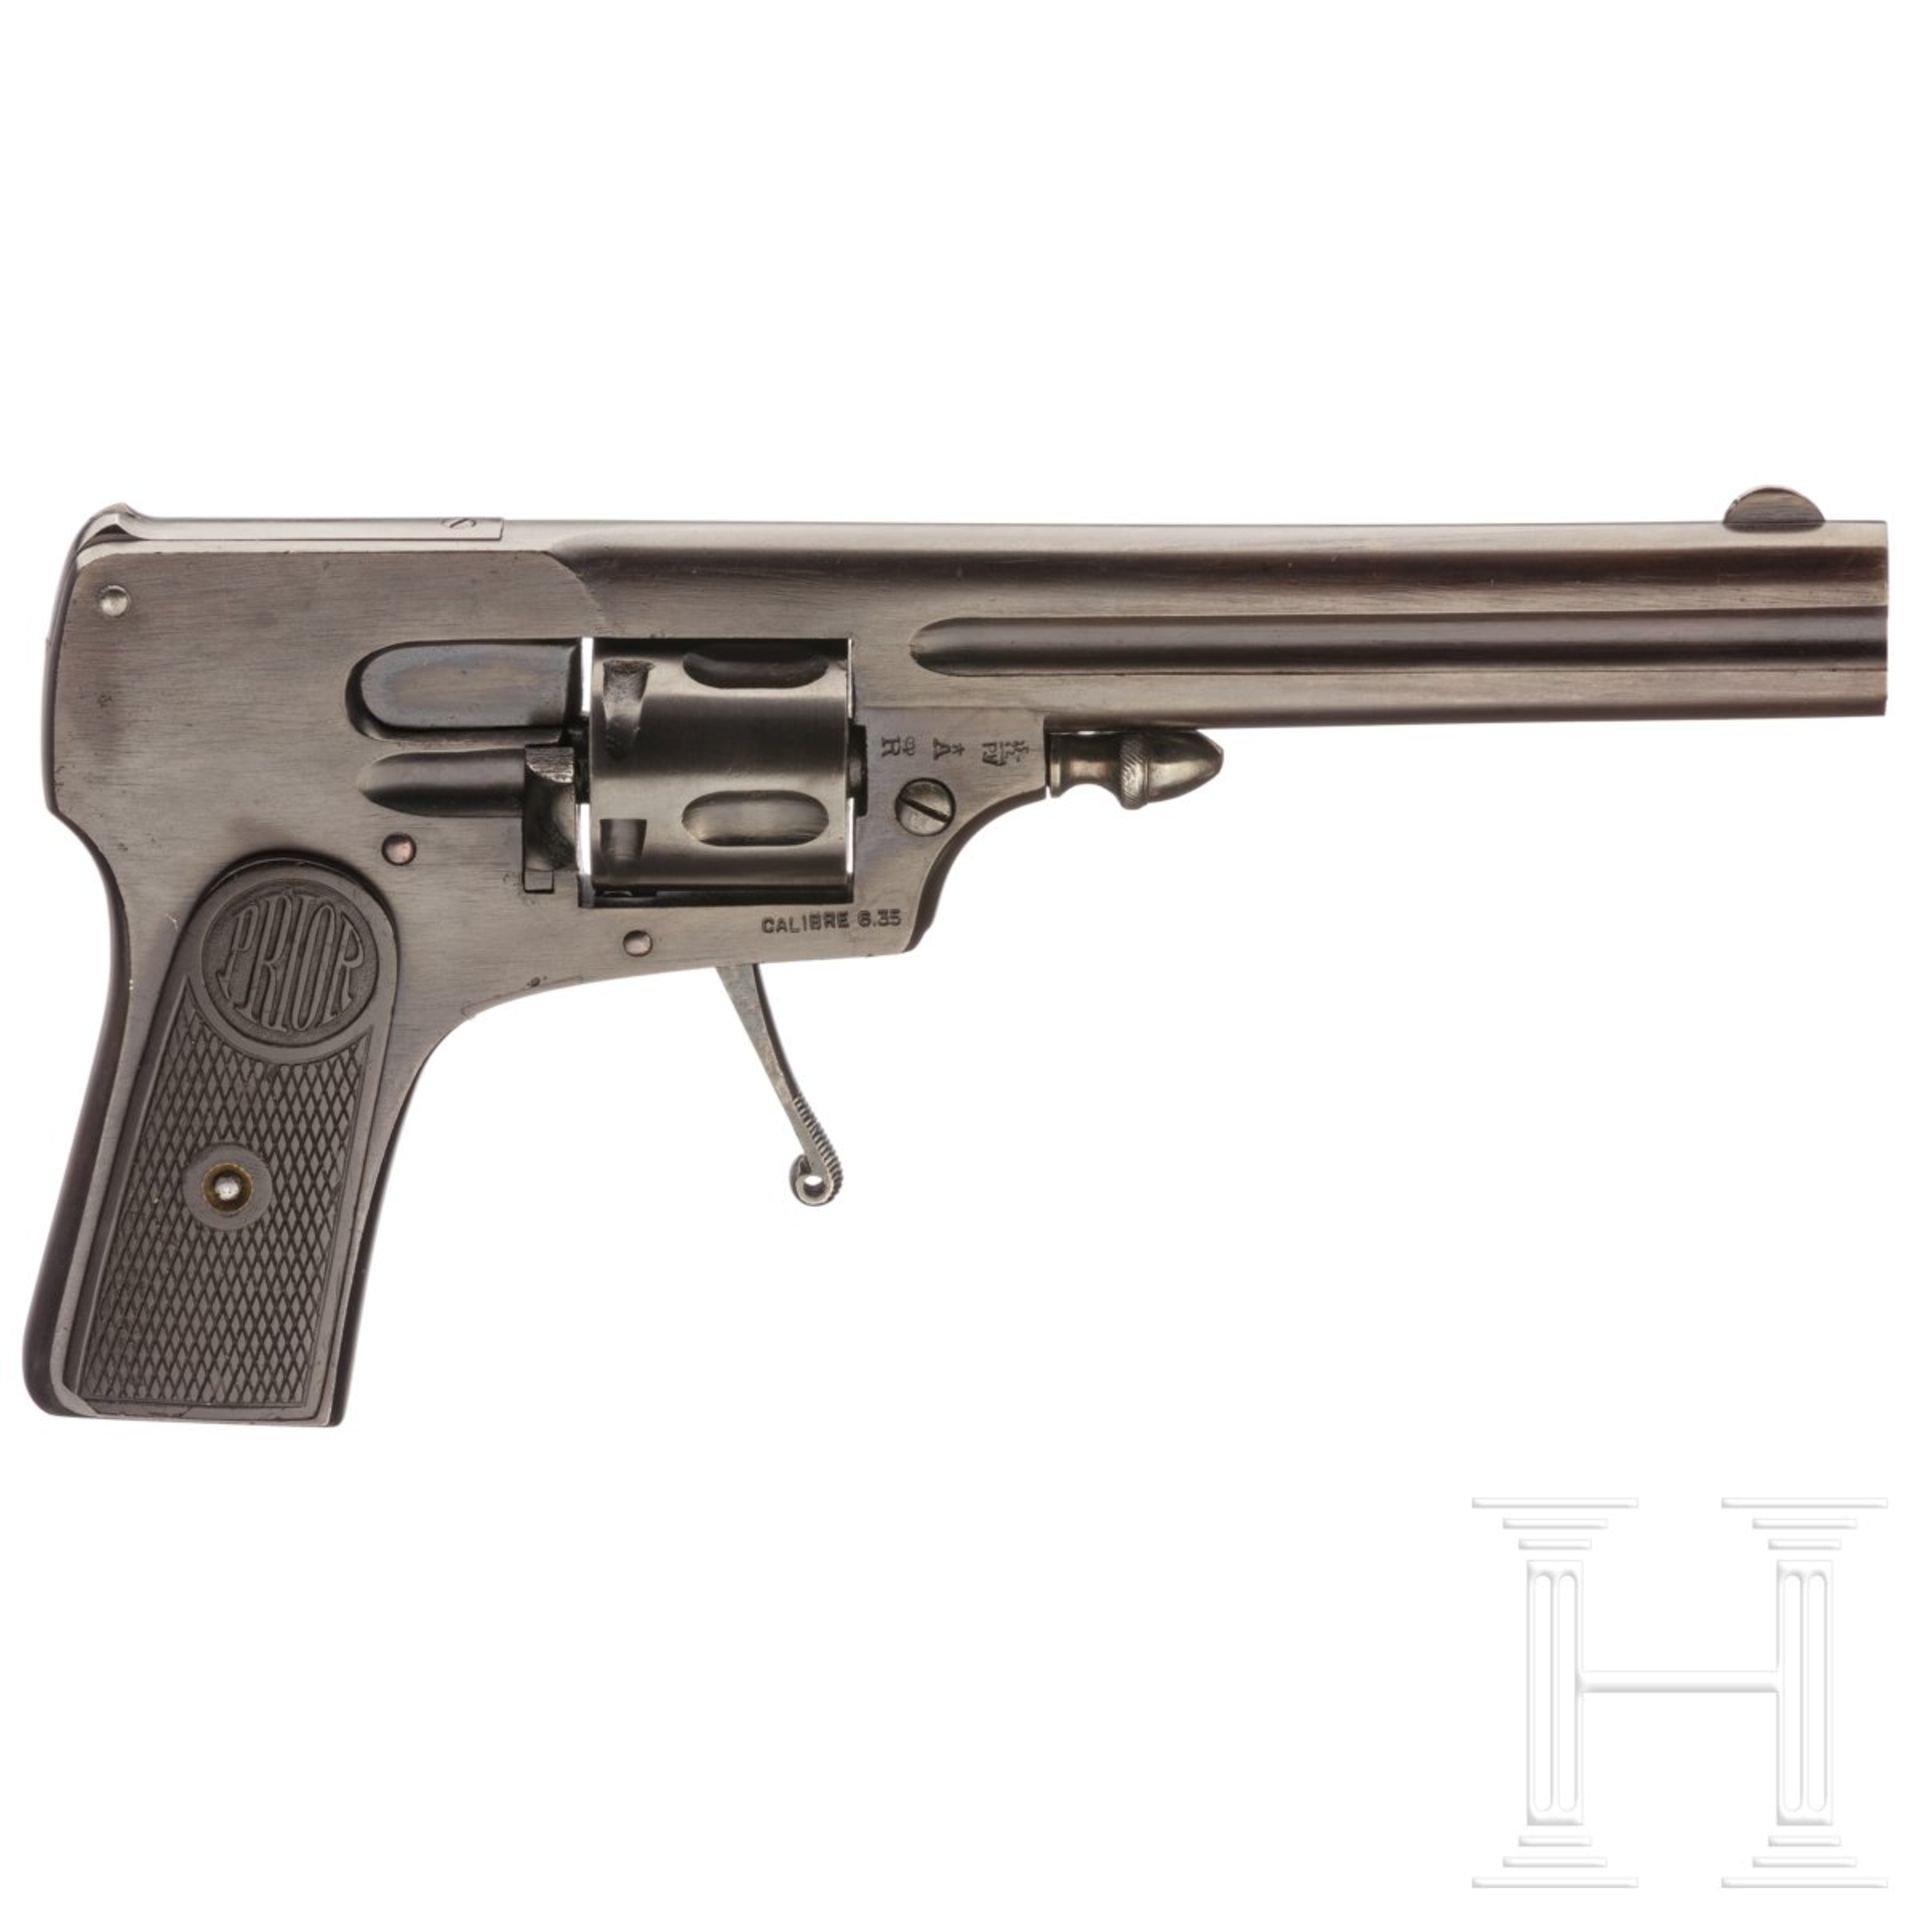 Belgischer Revolver "Prior", Typ Bulldog - Image 2 of 2